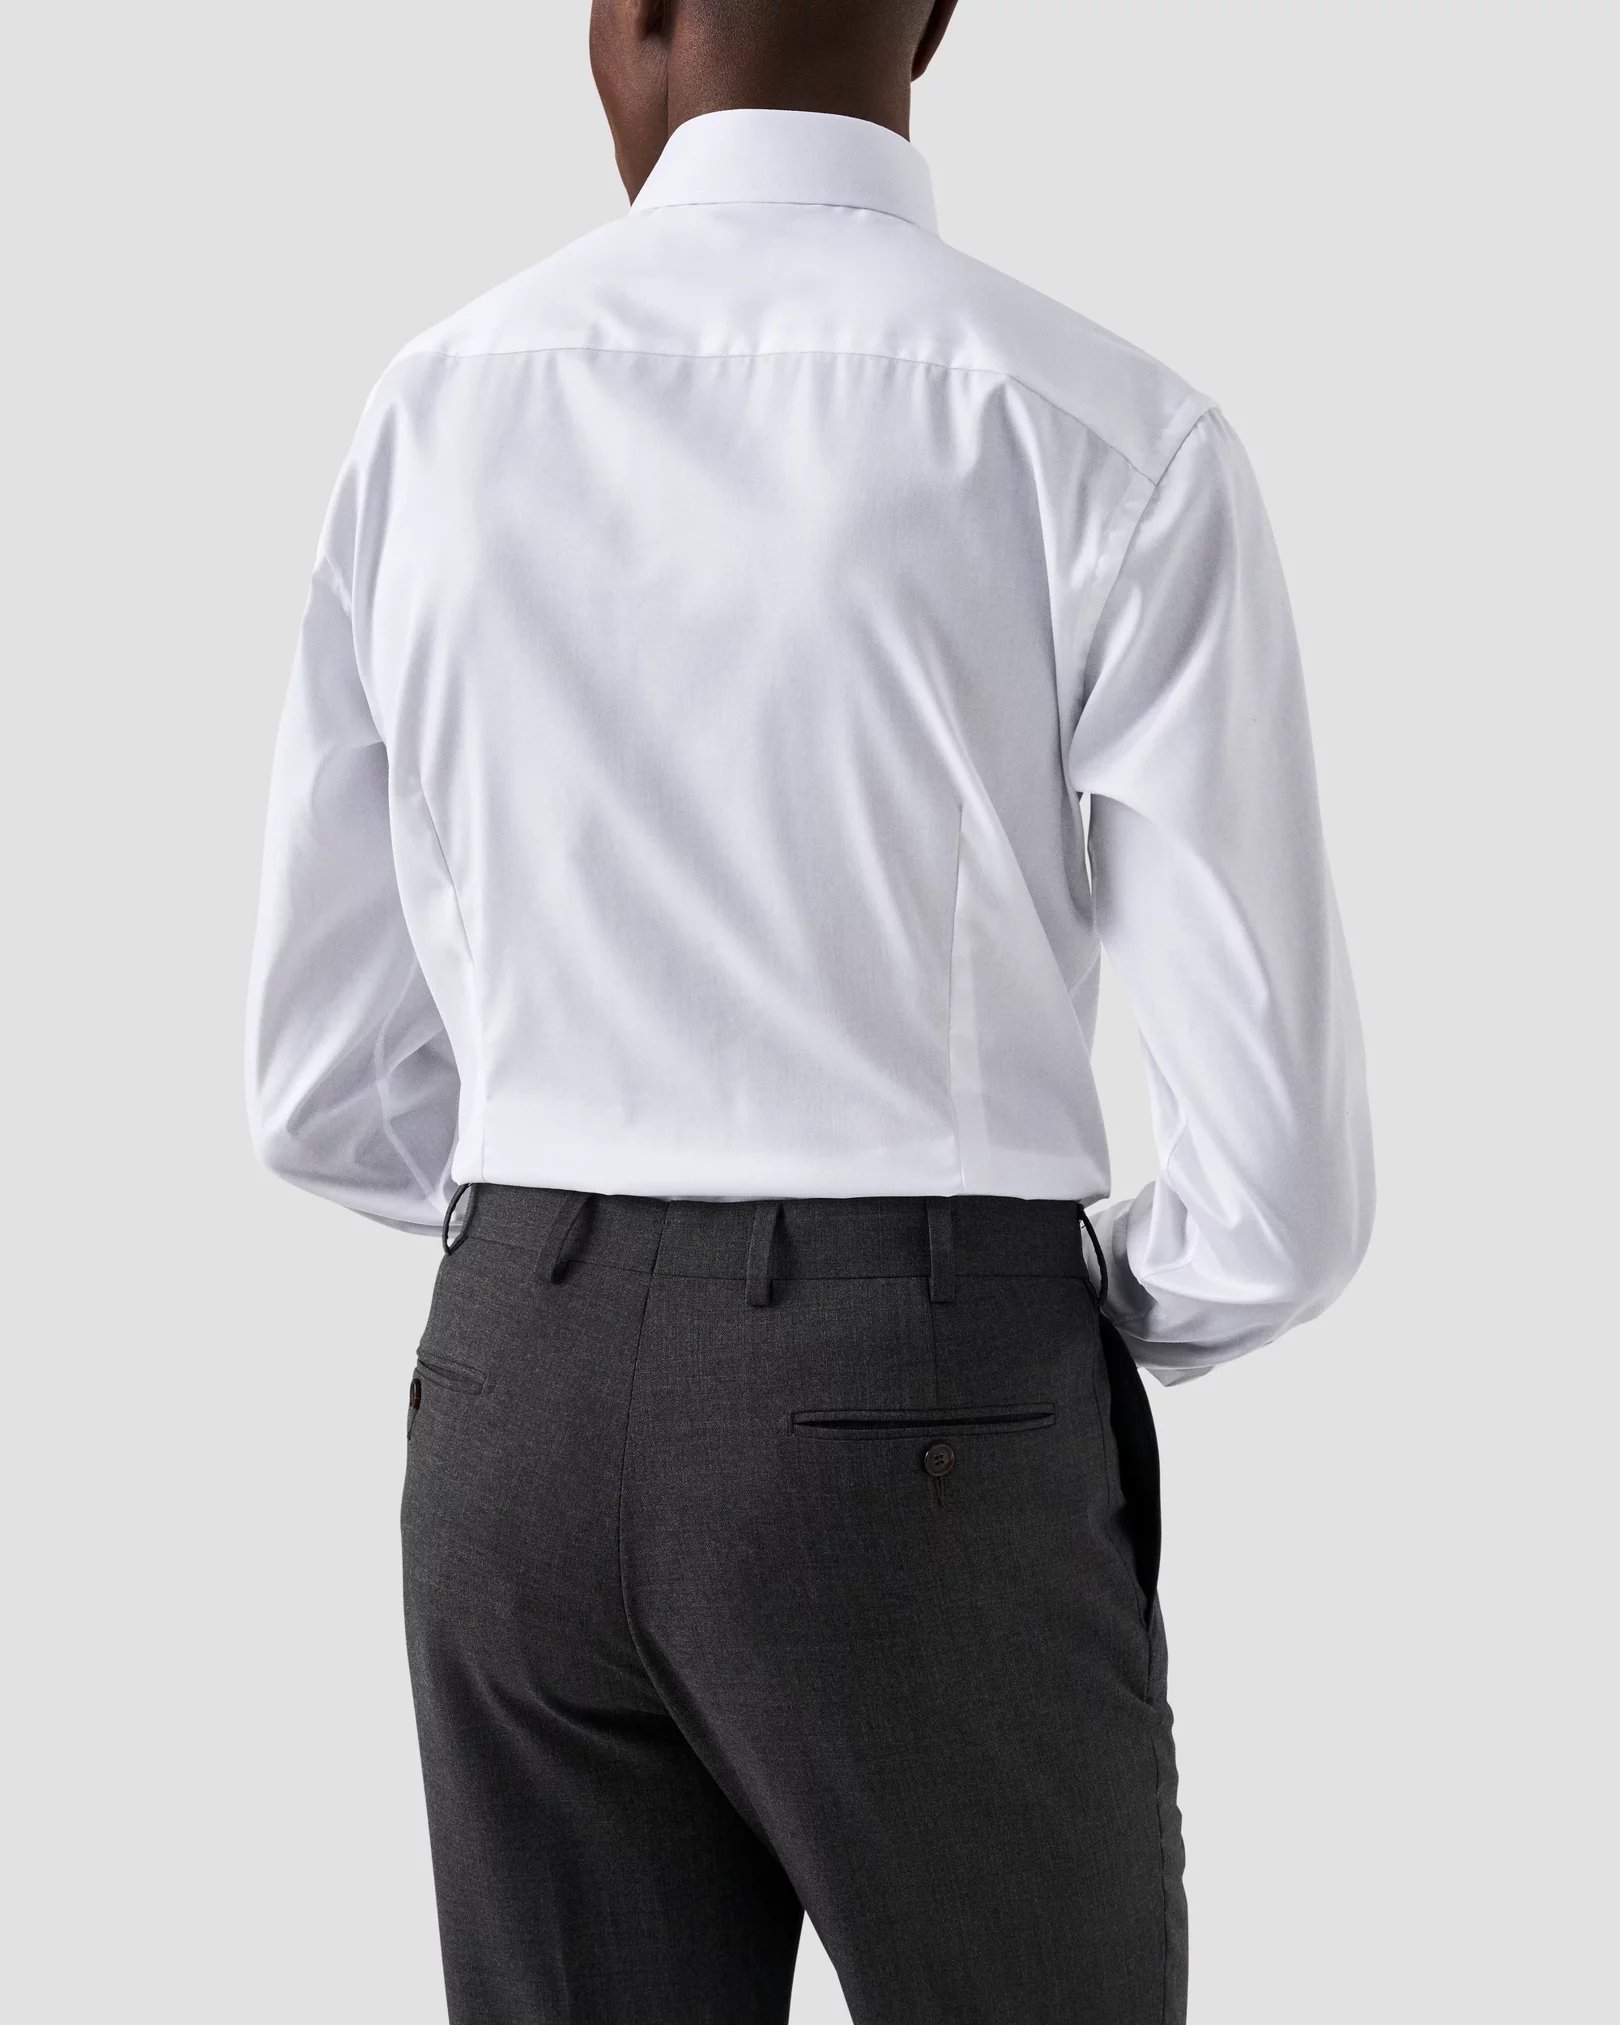 Eton - white signature twill shirt xls